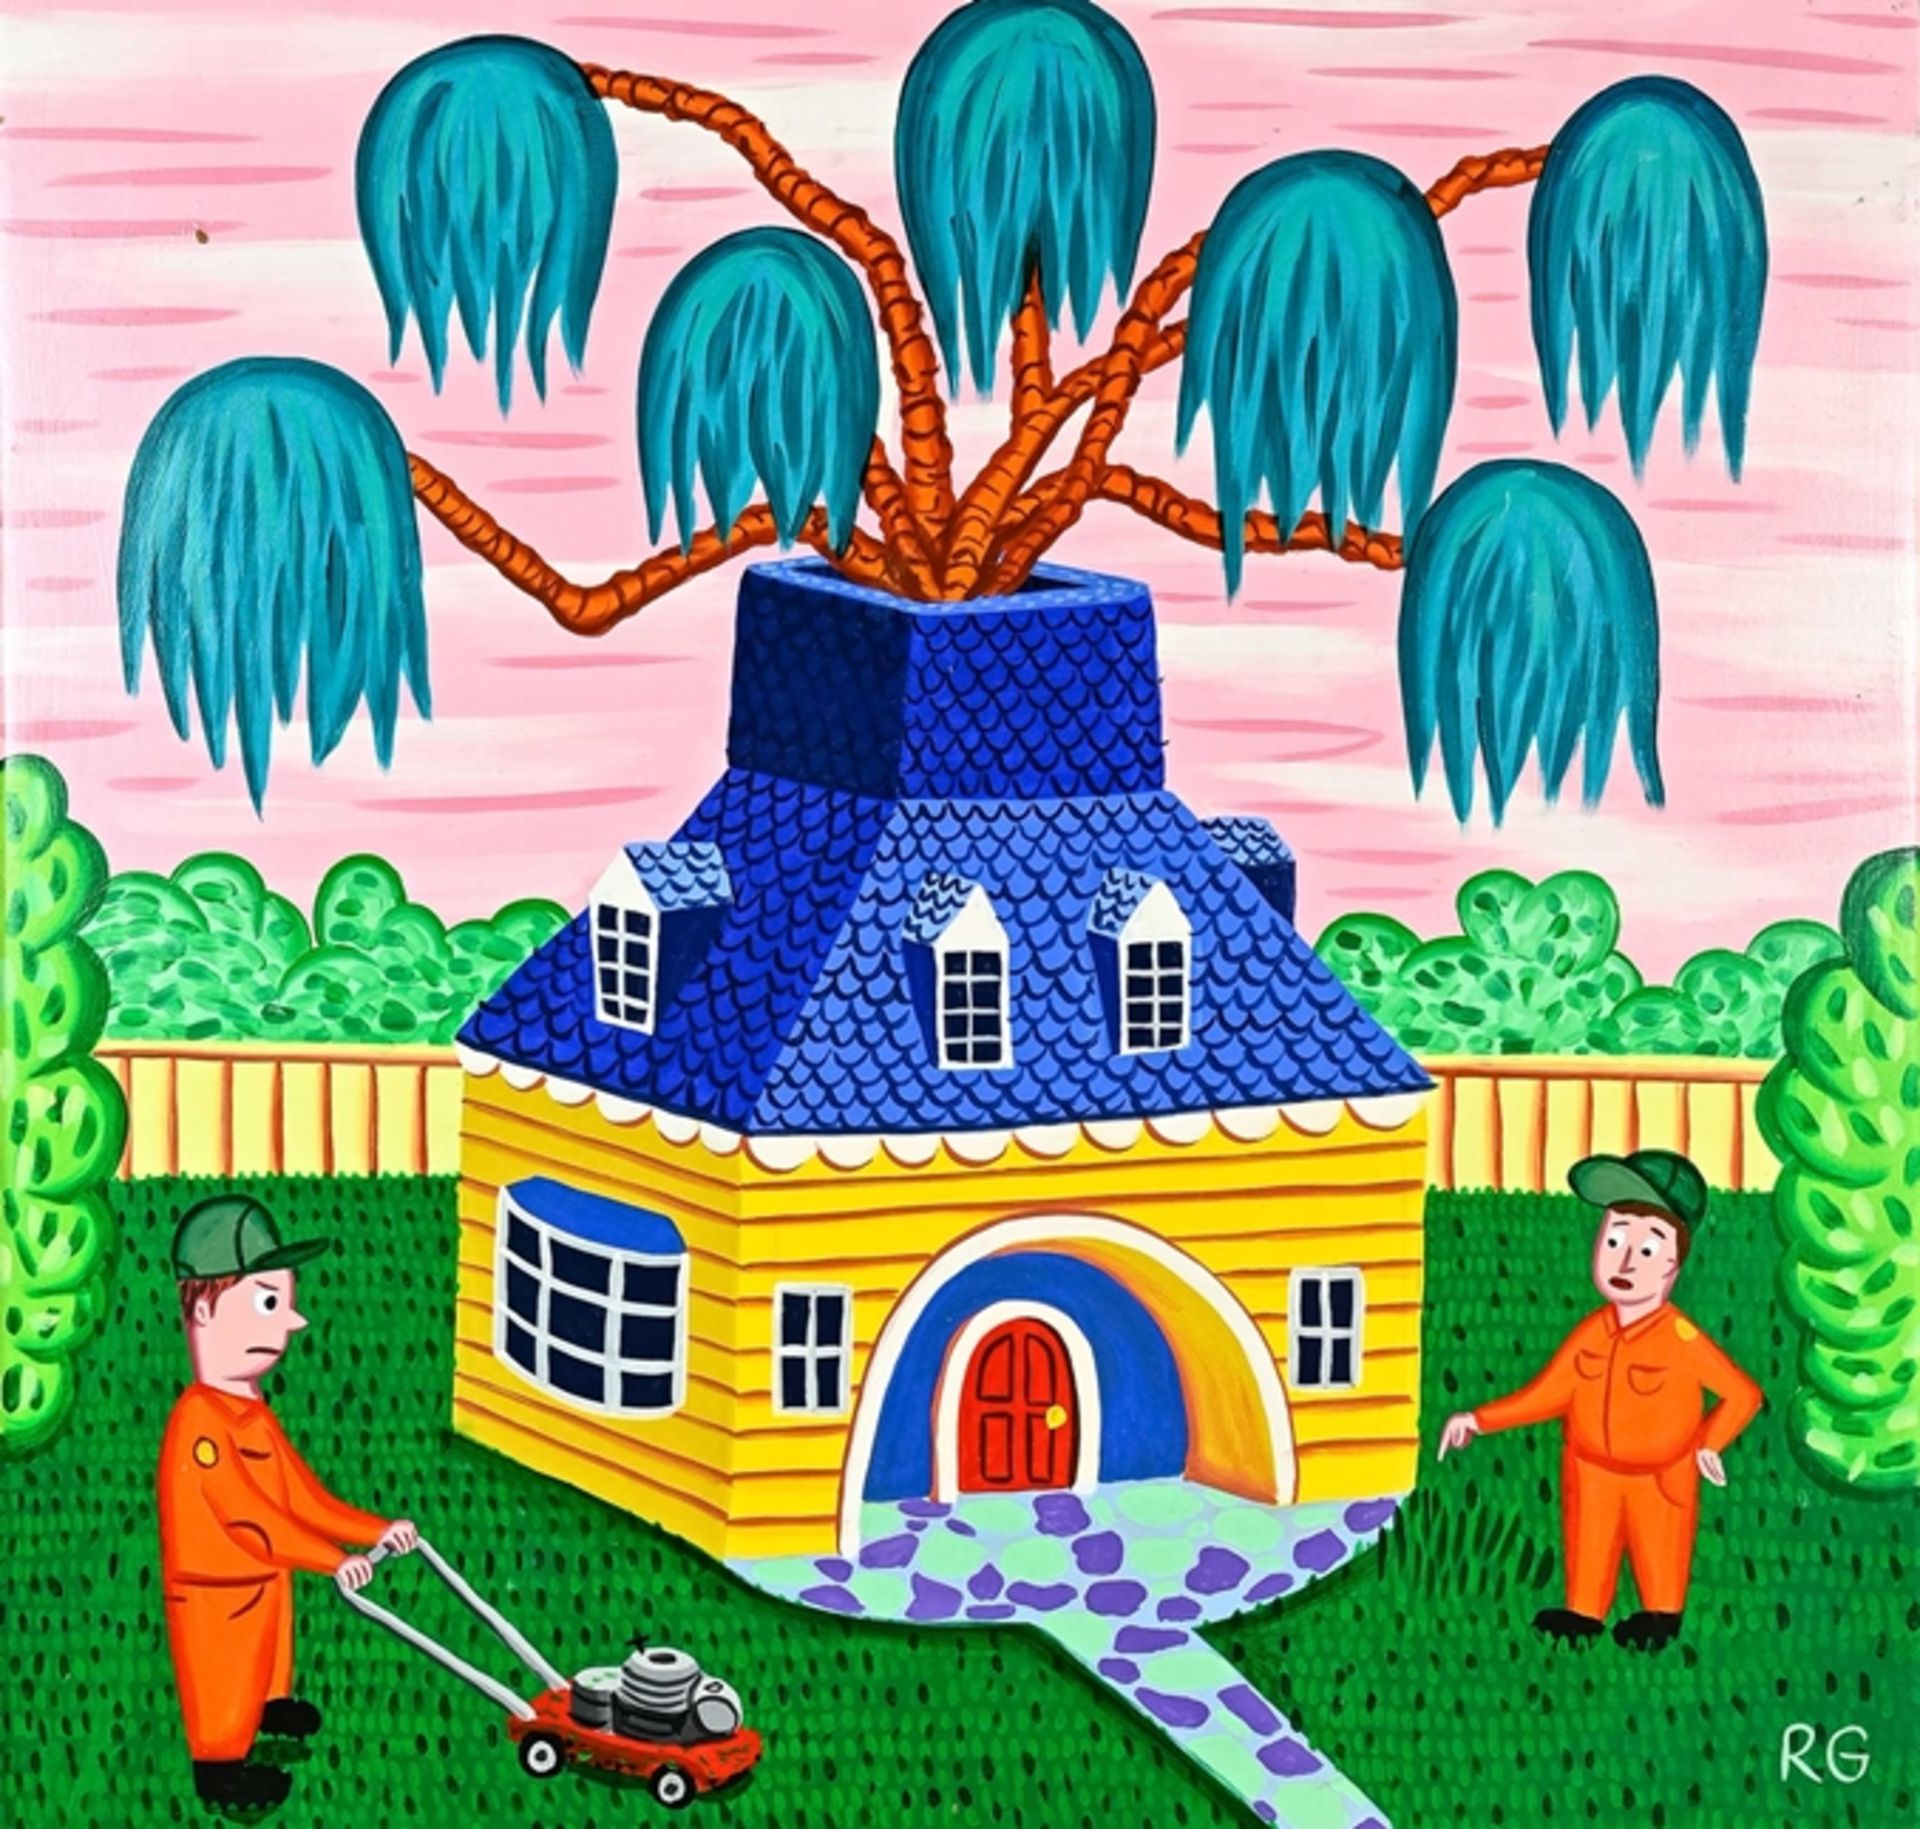 Greenblat, Rodney Alan (1960 San Francisco), "Weeping House, Palm", acrylic on cardboard, 74 x 74 c